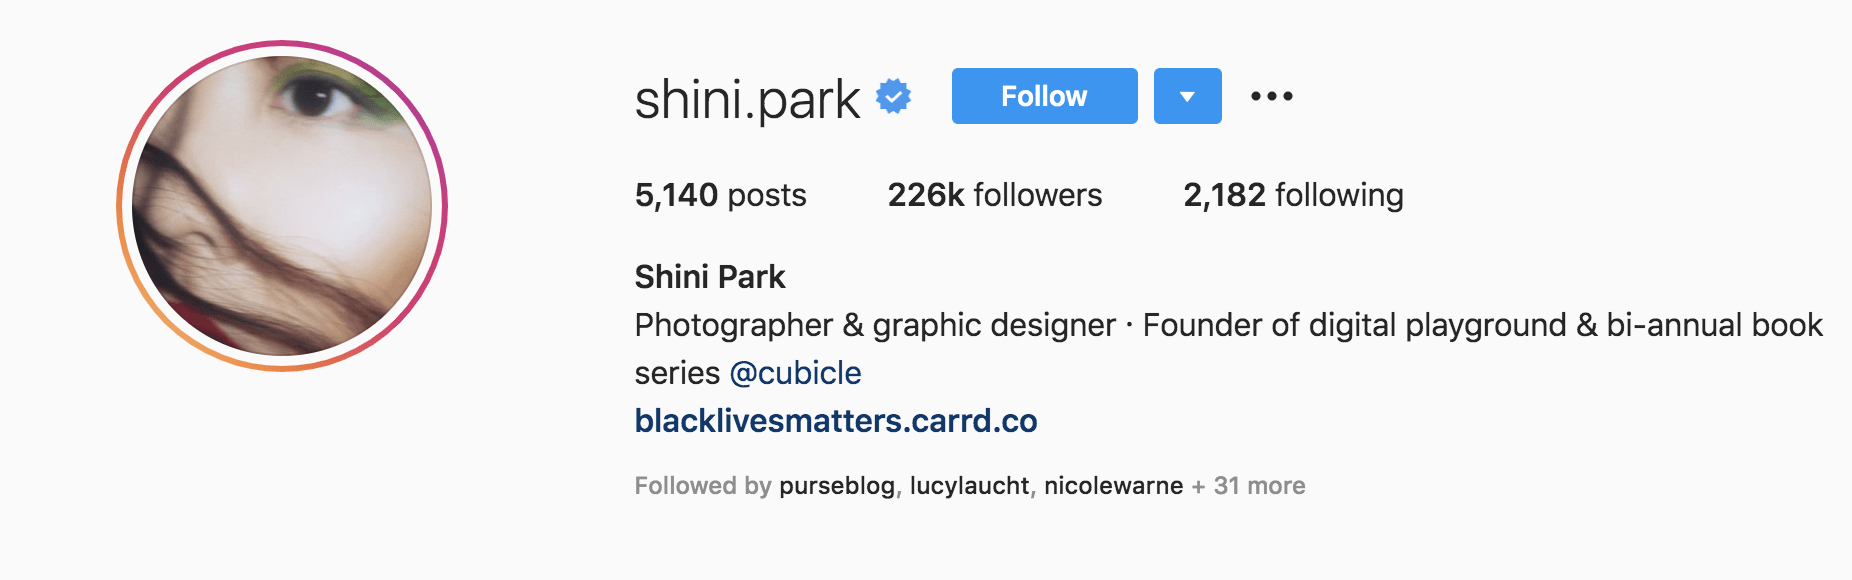 Top Fashion Influencers - Shini Park